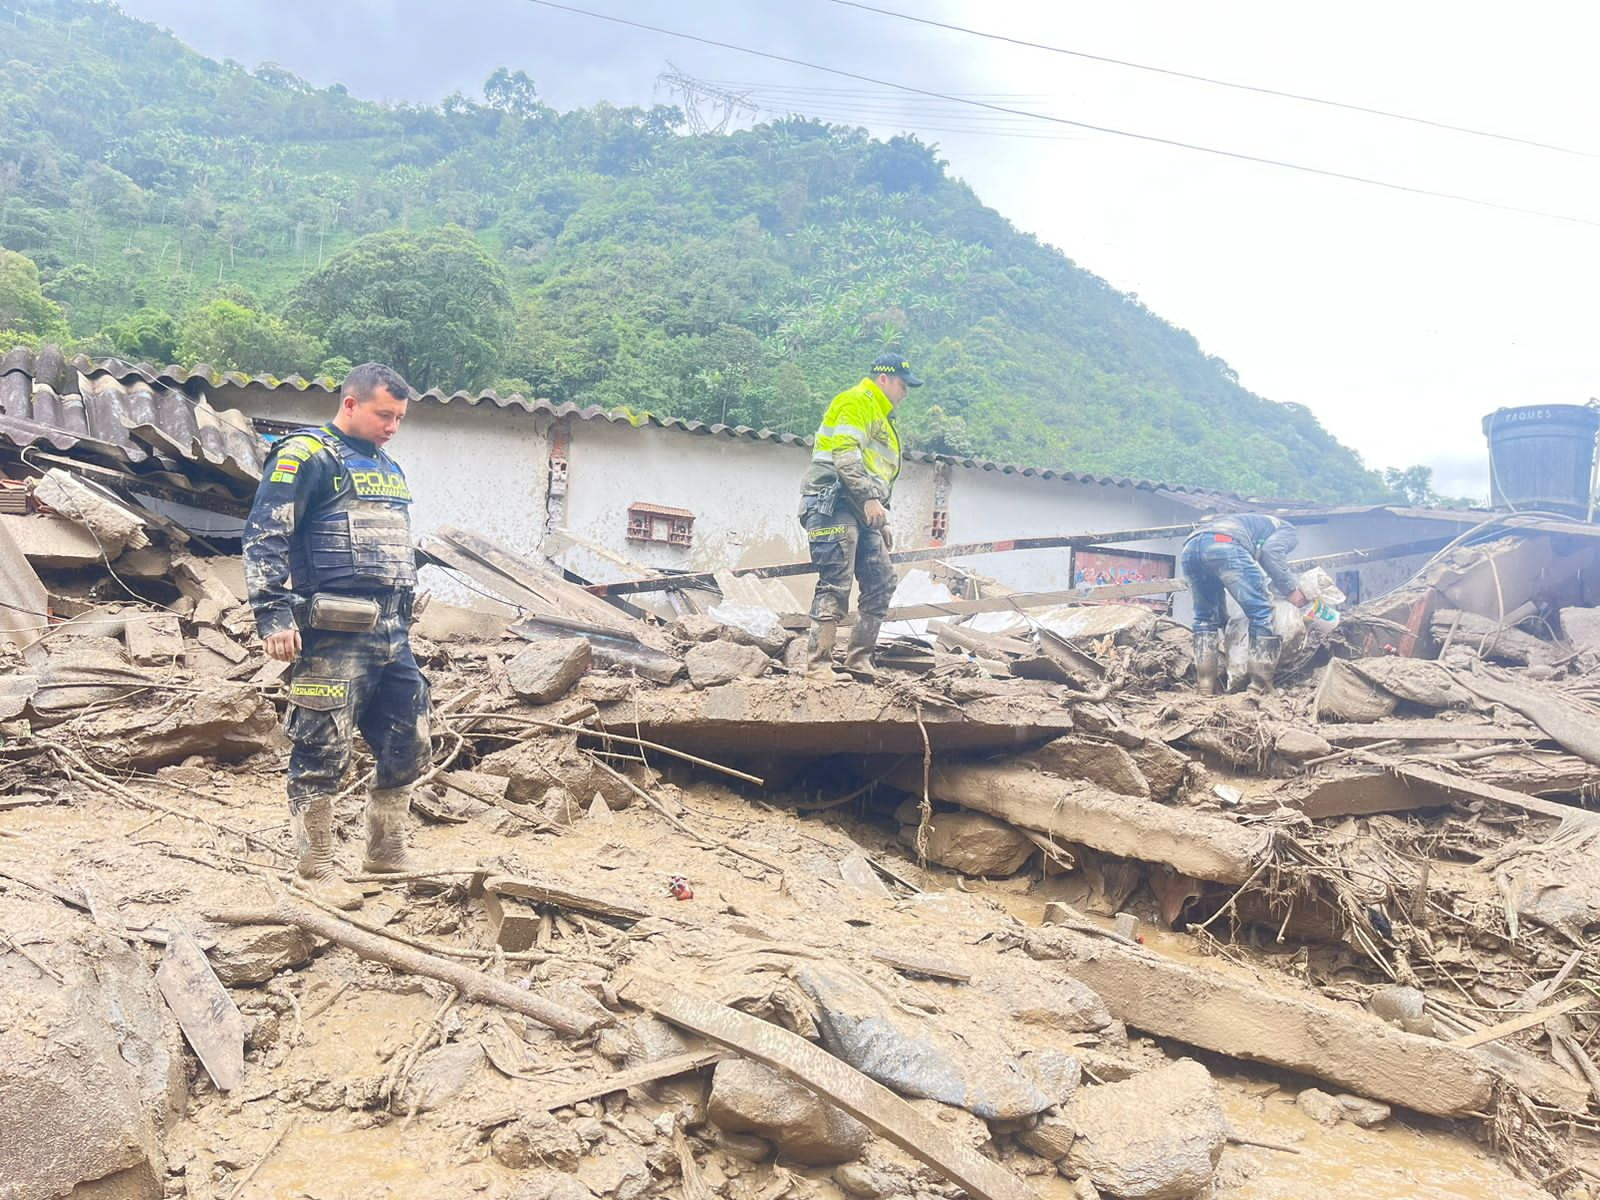 Colombia landslide kills at least 12 - Civil Defense | Reuters